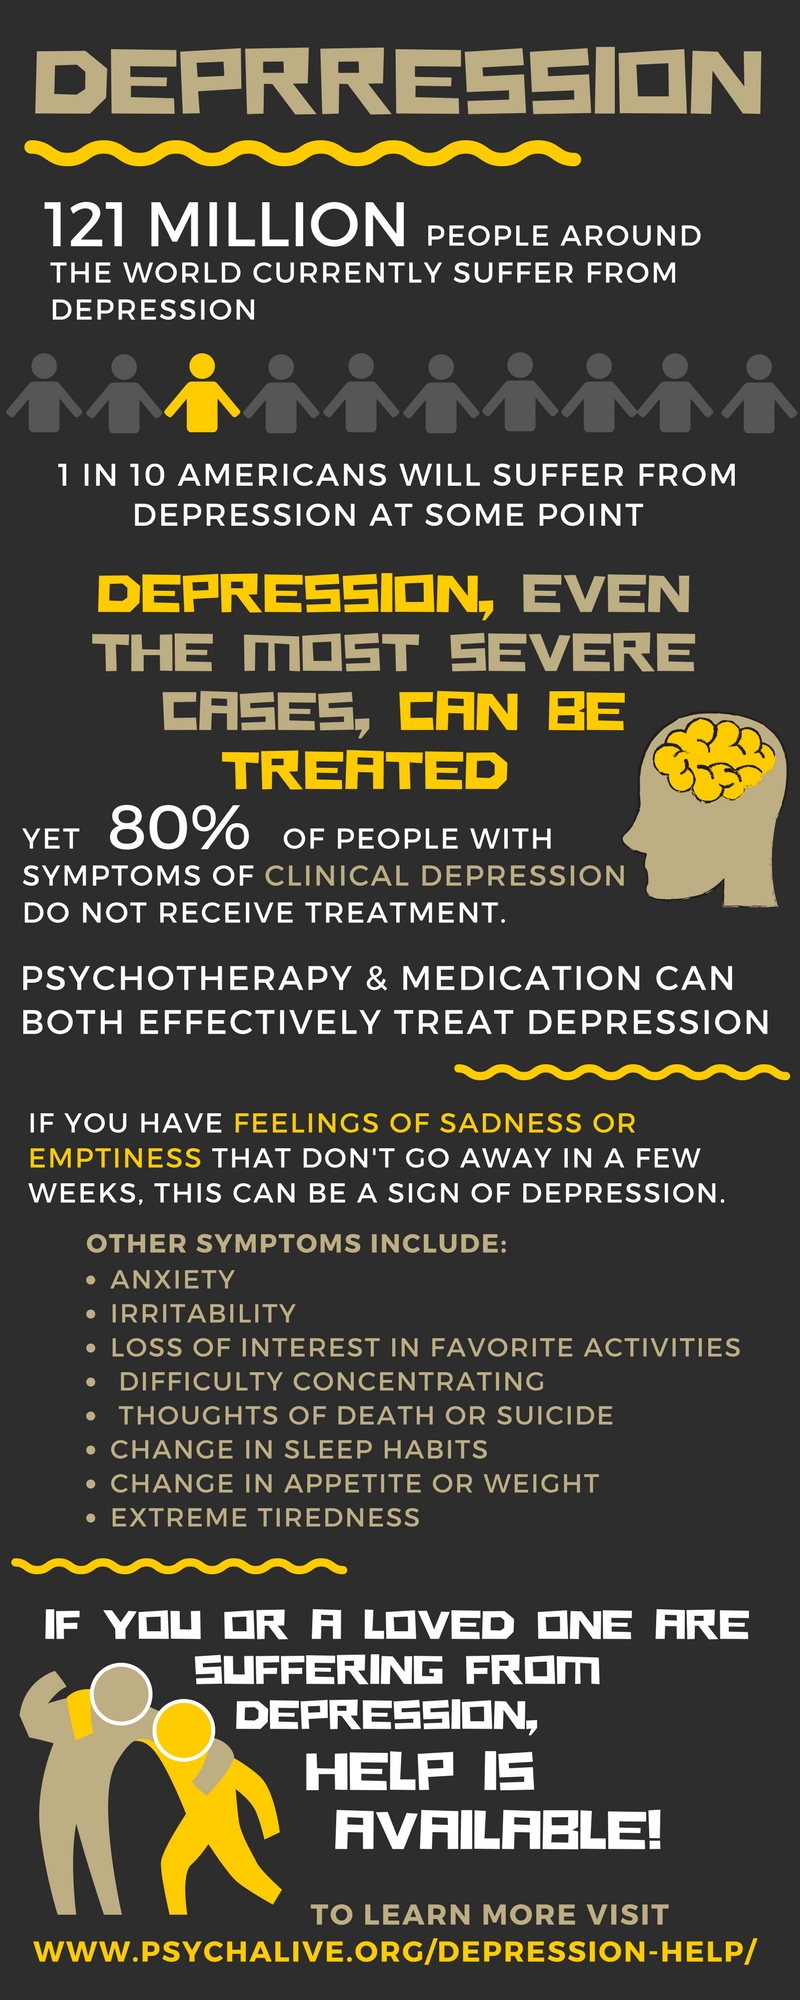 depression-help - psychalive